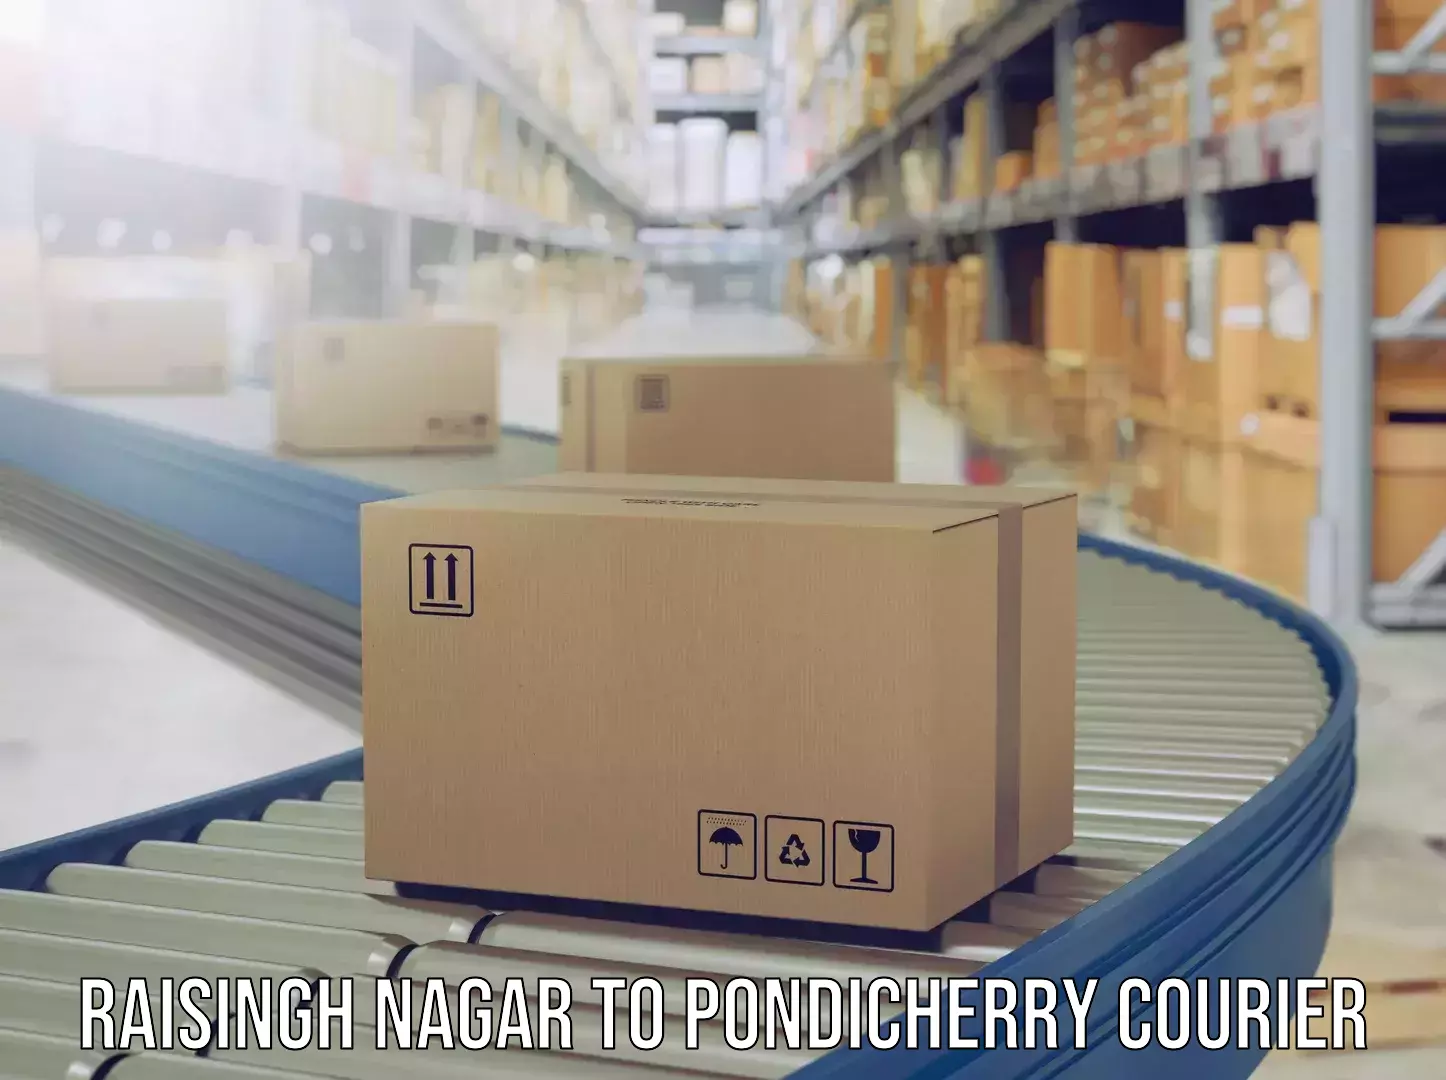 Luggage delivery app Raisingh Nagar to Pondicherry